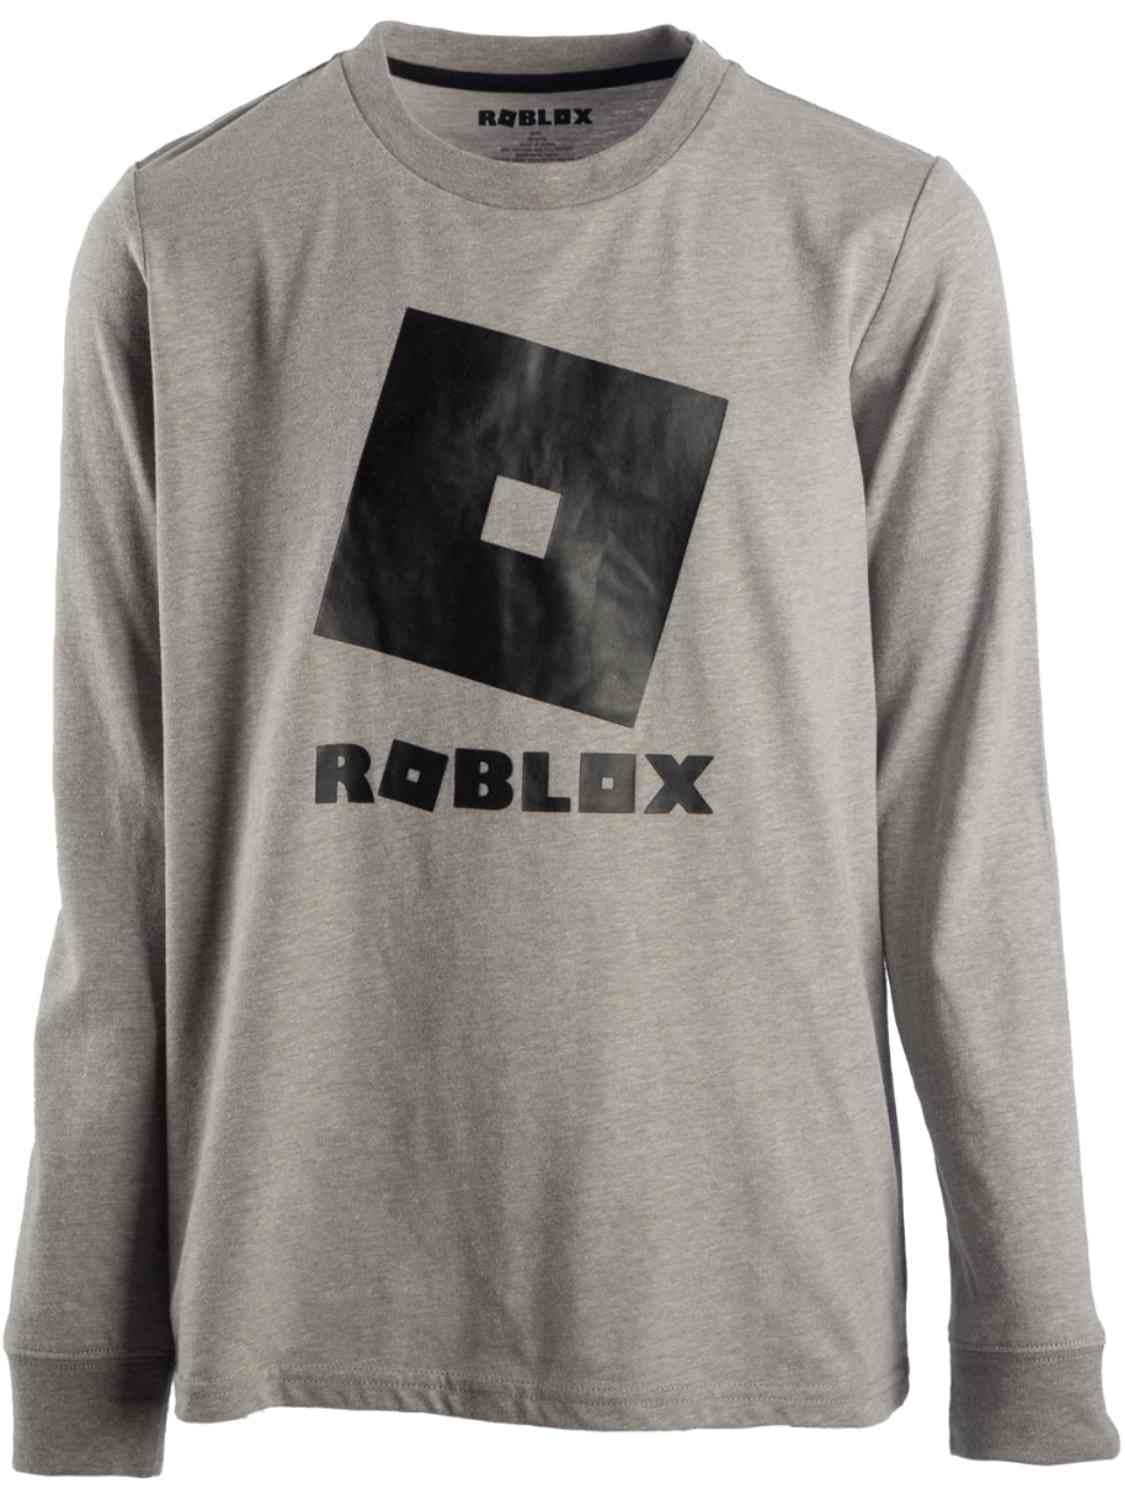 Boys Gray Black Roblox T Shirt Long Sleeve Tee Shirt Walmart Com Walmart Com - grey long sleeve roblox